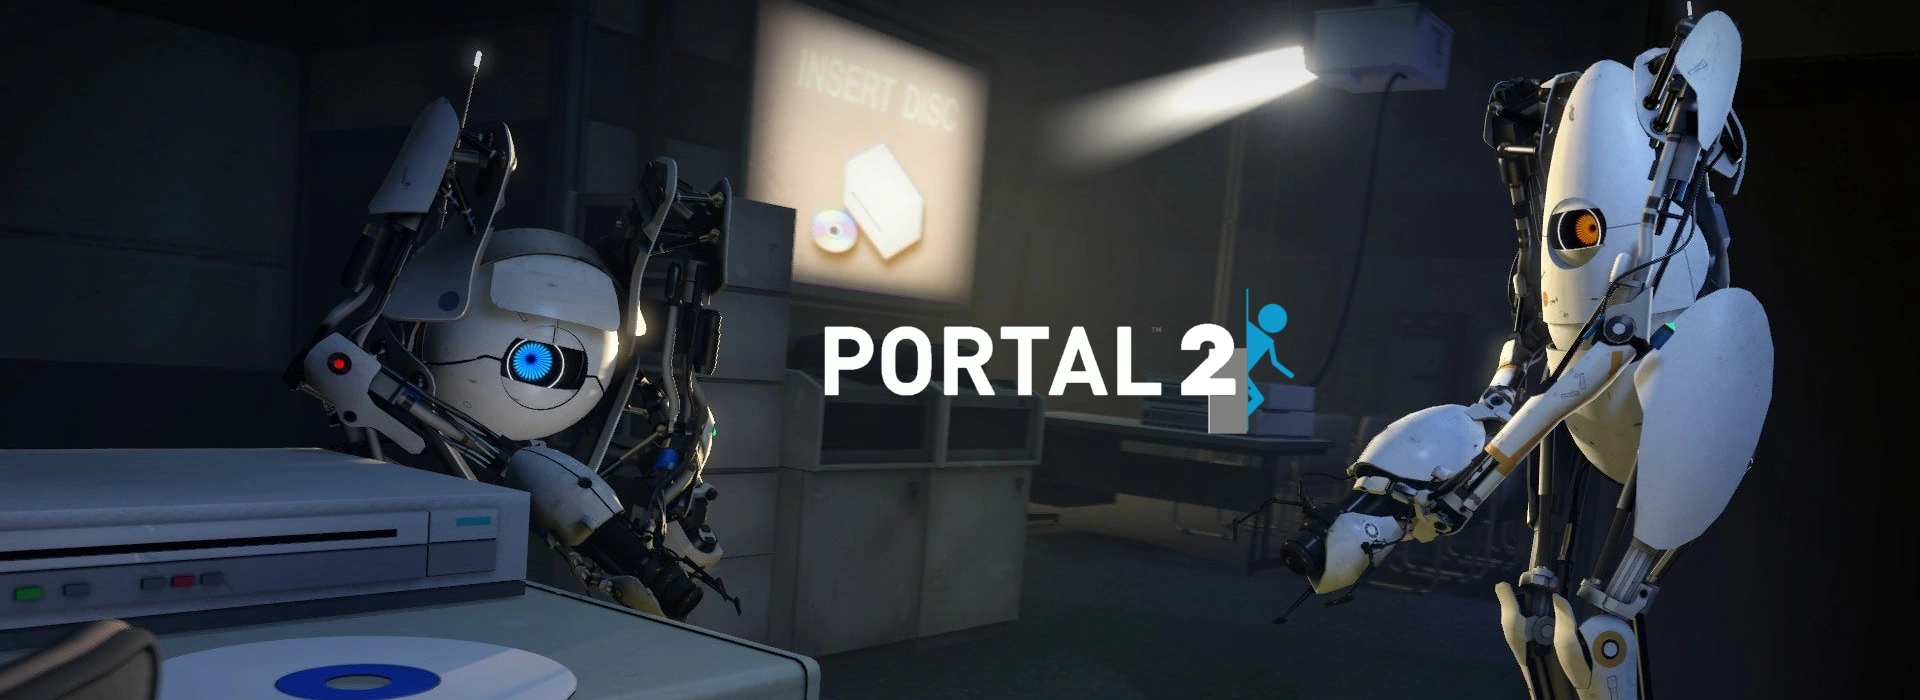 portal.2.banner3